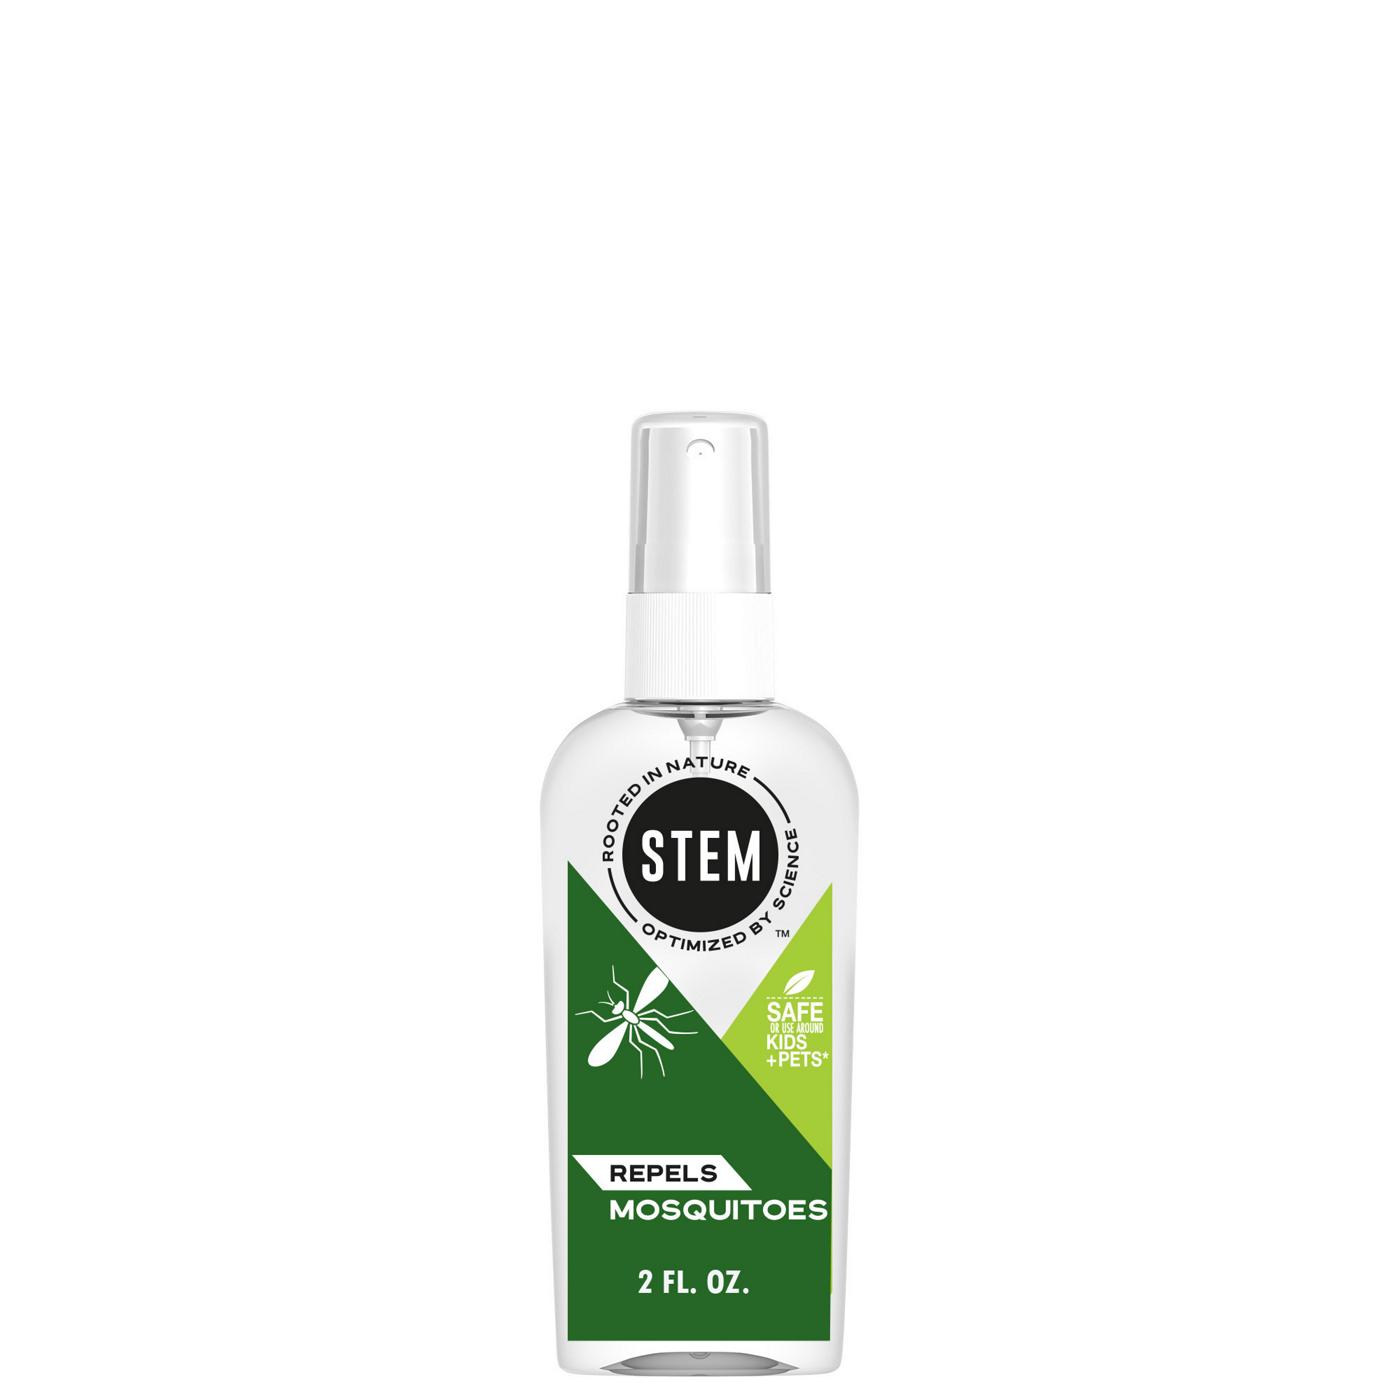 Stem Mosquito Repellent Spray - Shop Insect Repellant at H-E-B